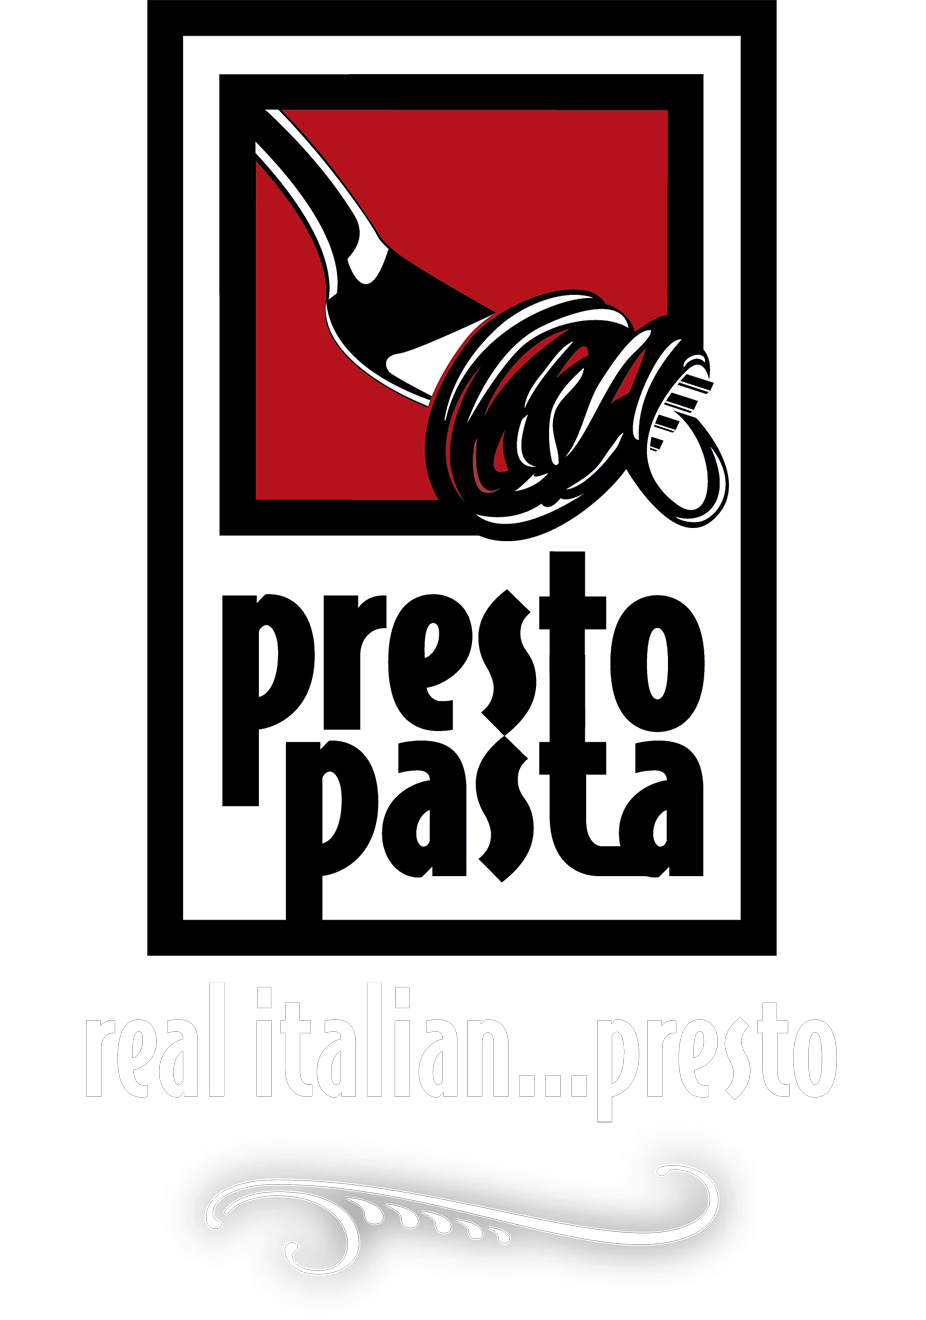 Pasta Logo - Presto Pasta | Real Italian... Presto!